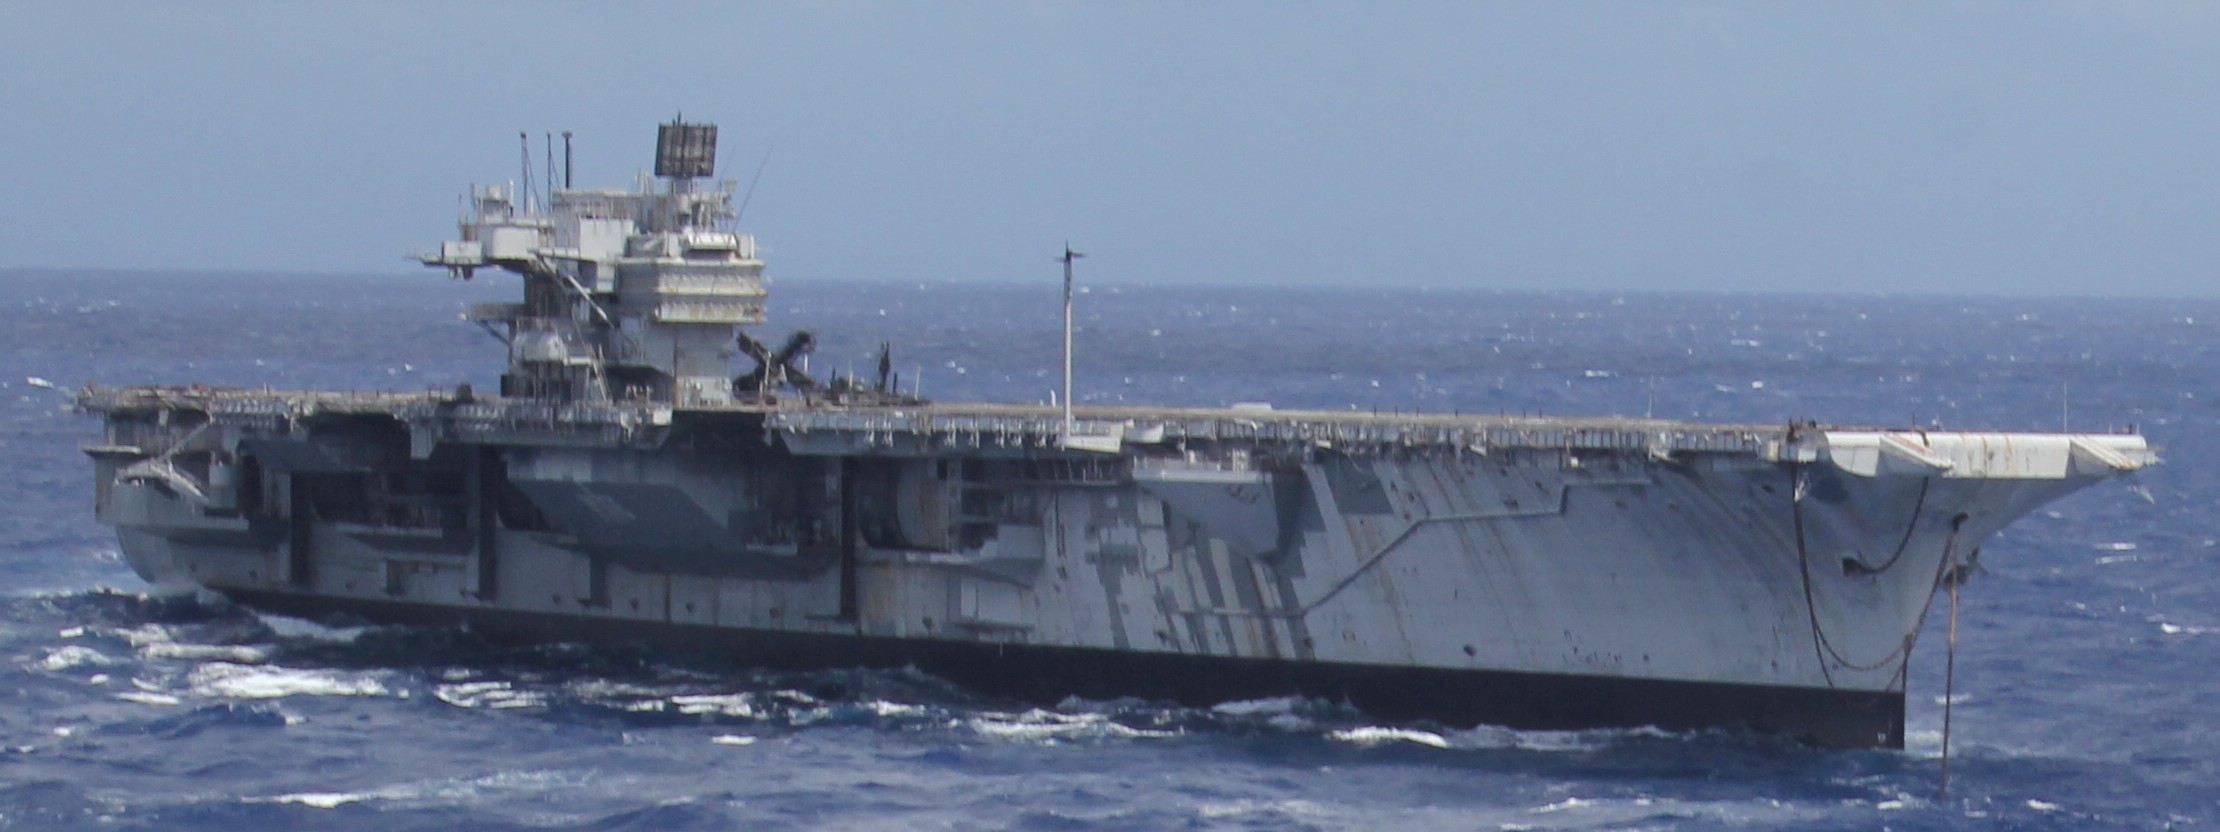 cv-60 uss saratoga forrestal class aircraft carrier us navy 04